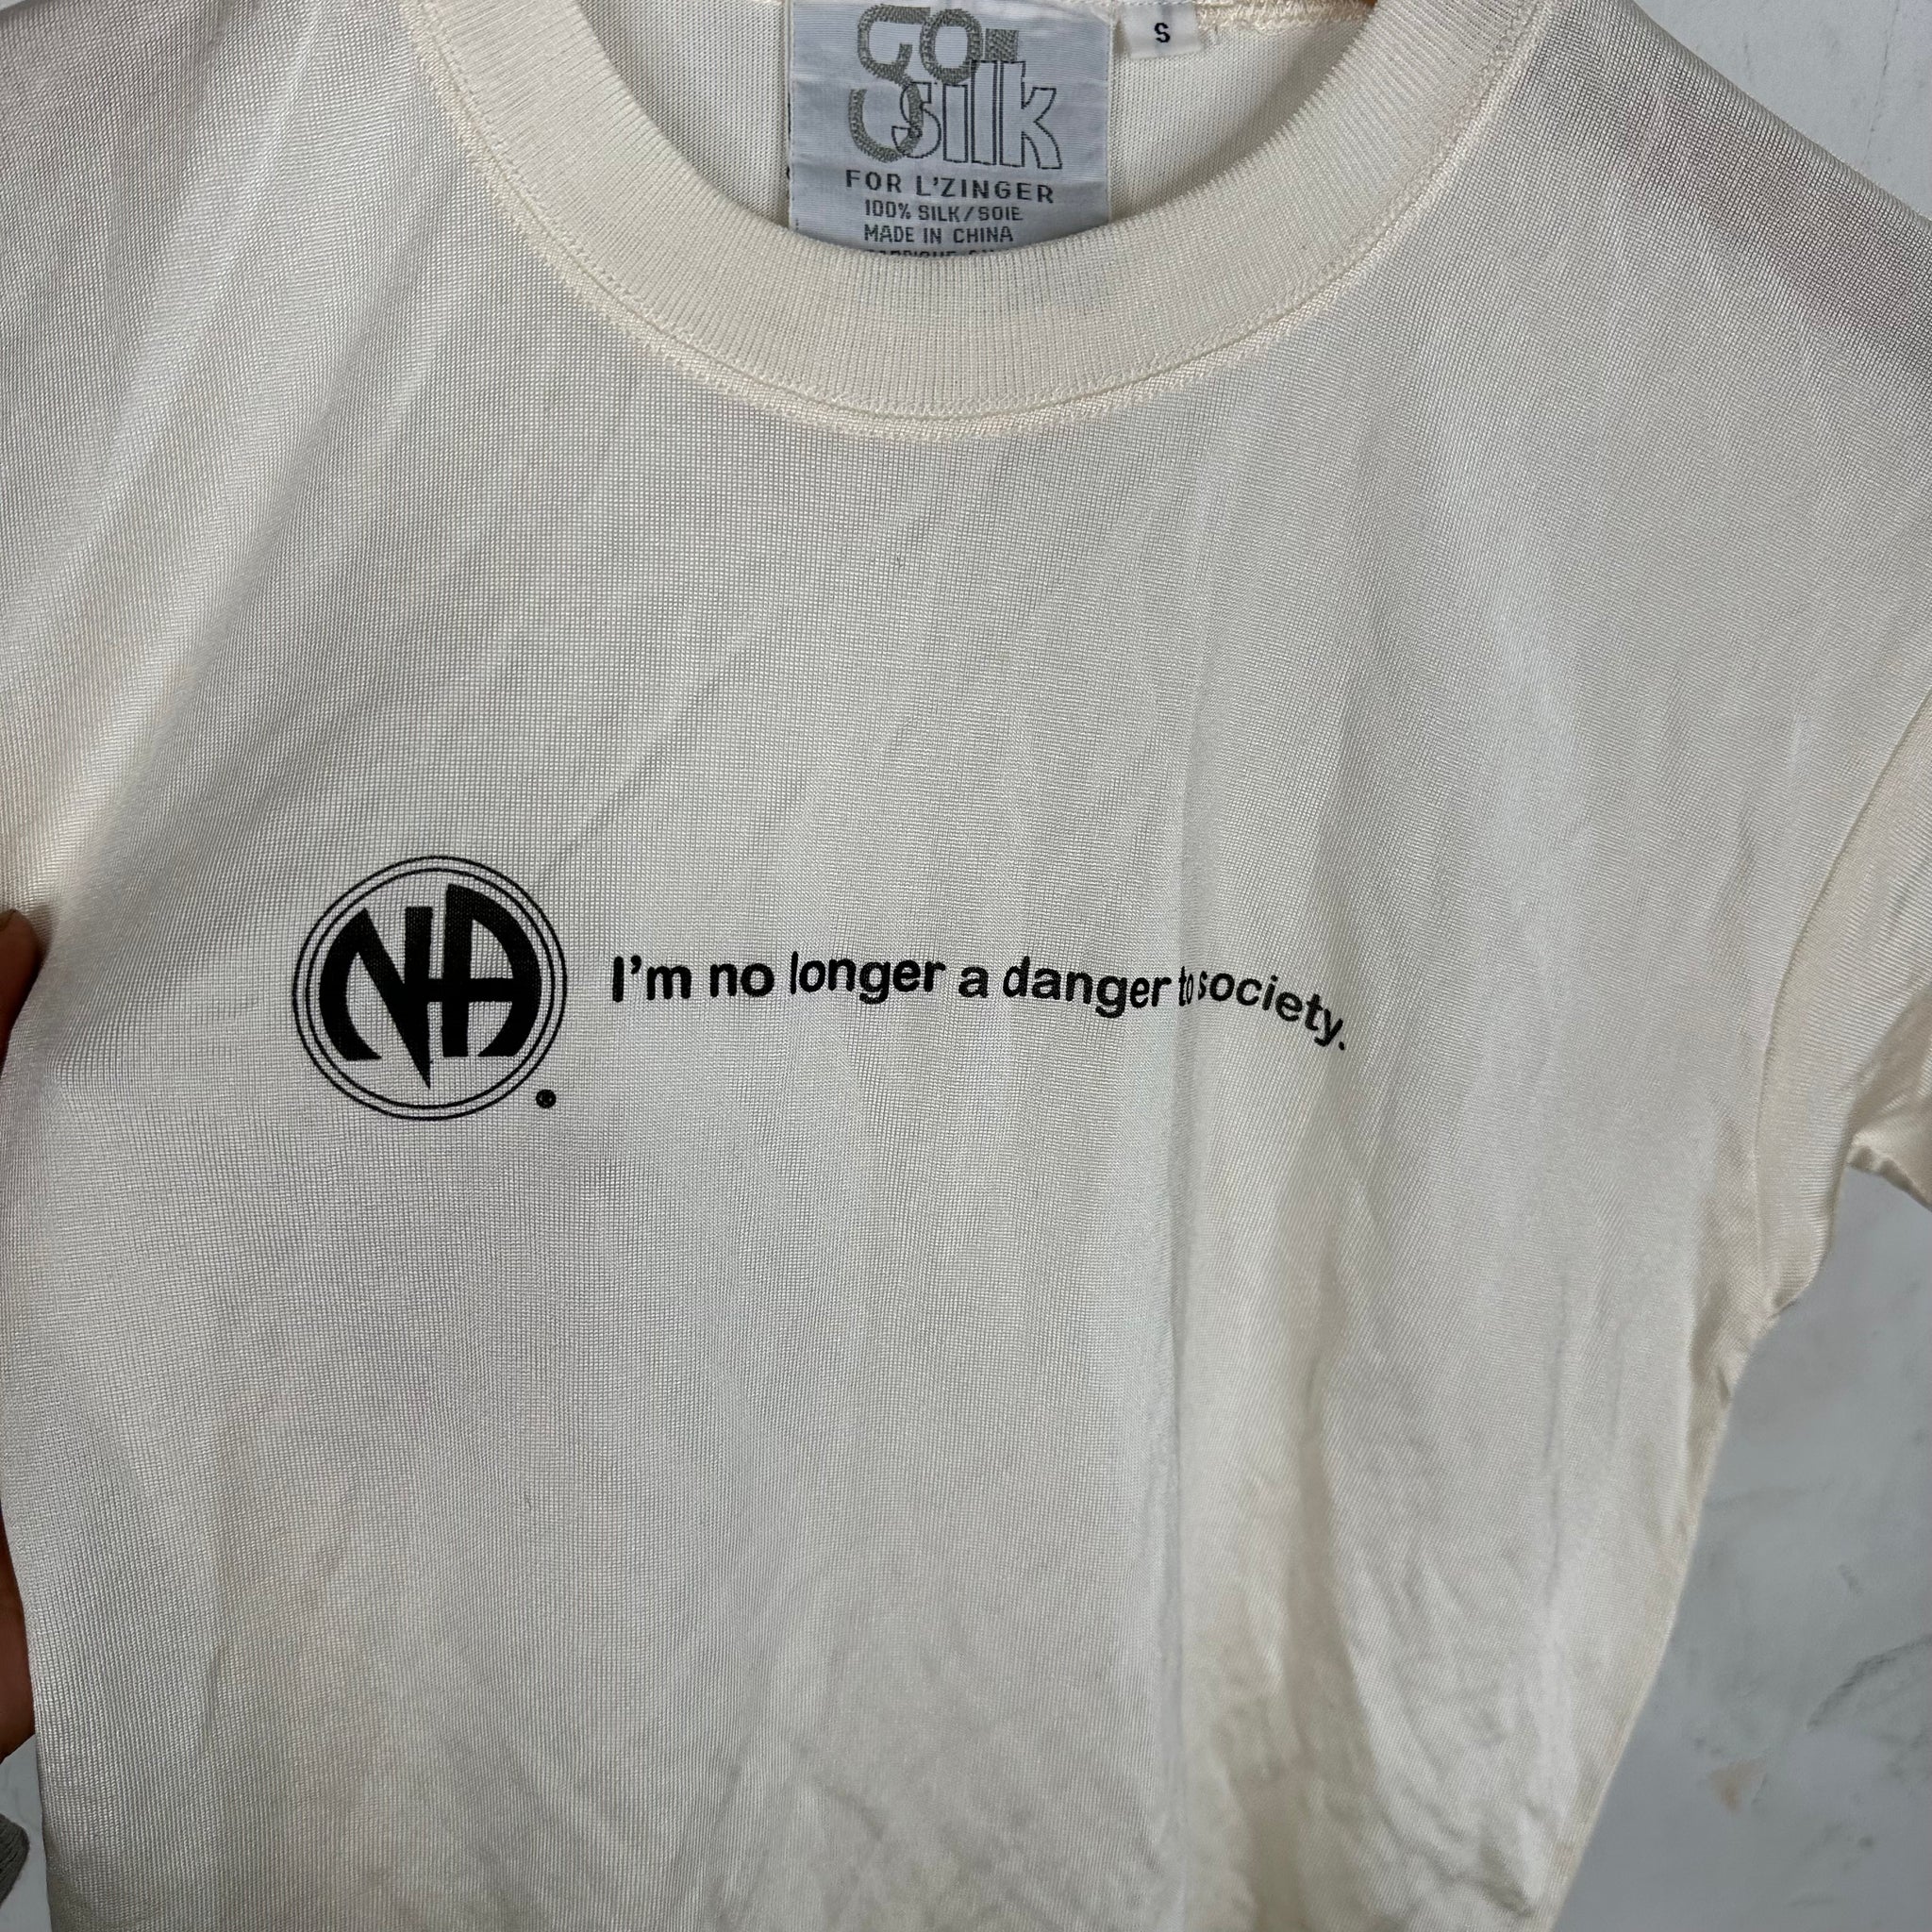 L’zinger Society Silk Baby T-shirt